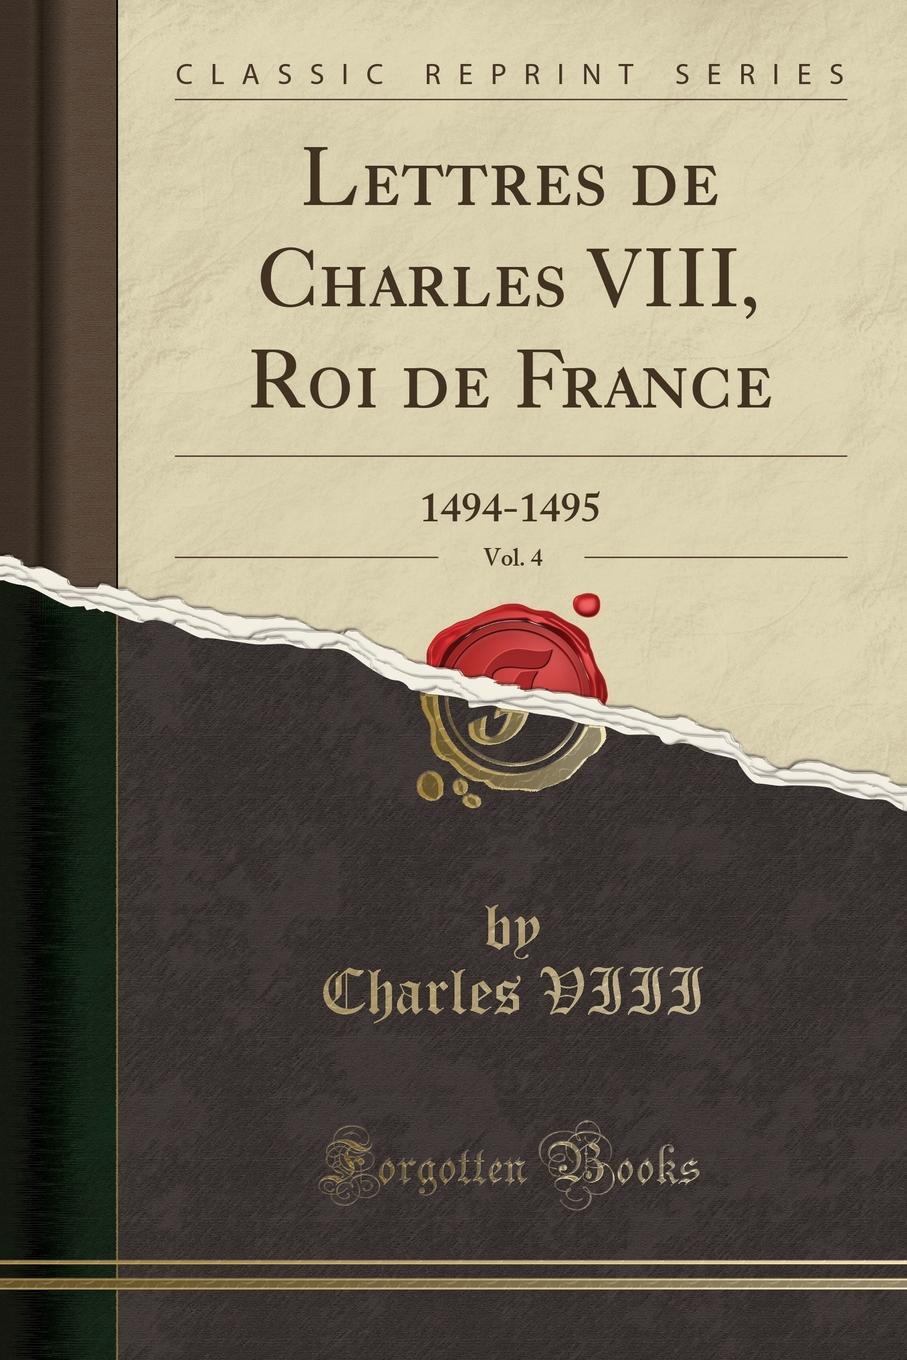 Charles VIII Lettres de Charles VIII, Roi de France, Vol. 4. 1494-1495 (Classic Reprint)